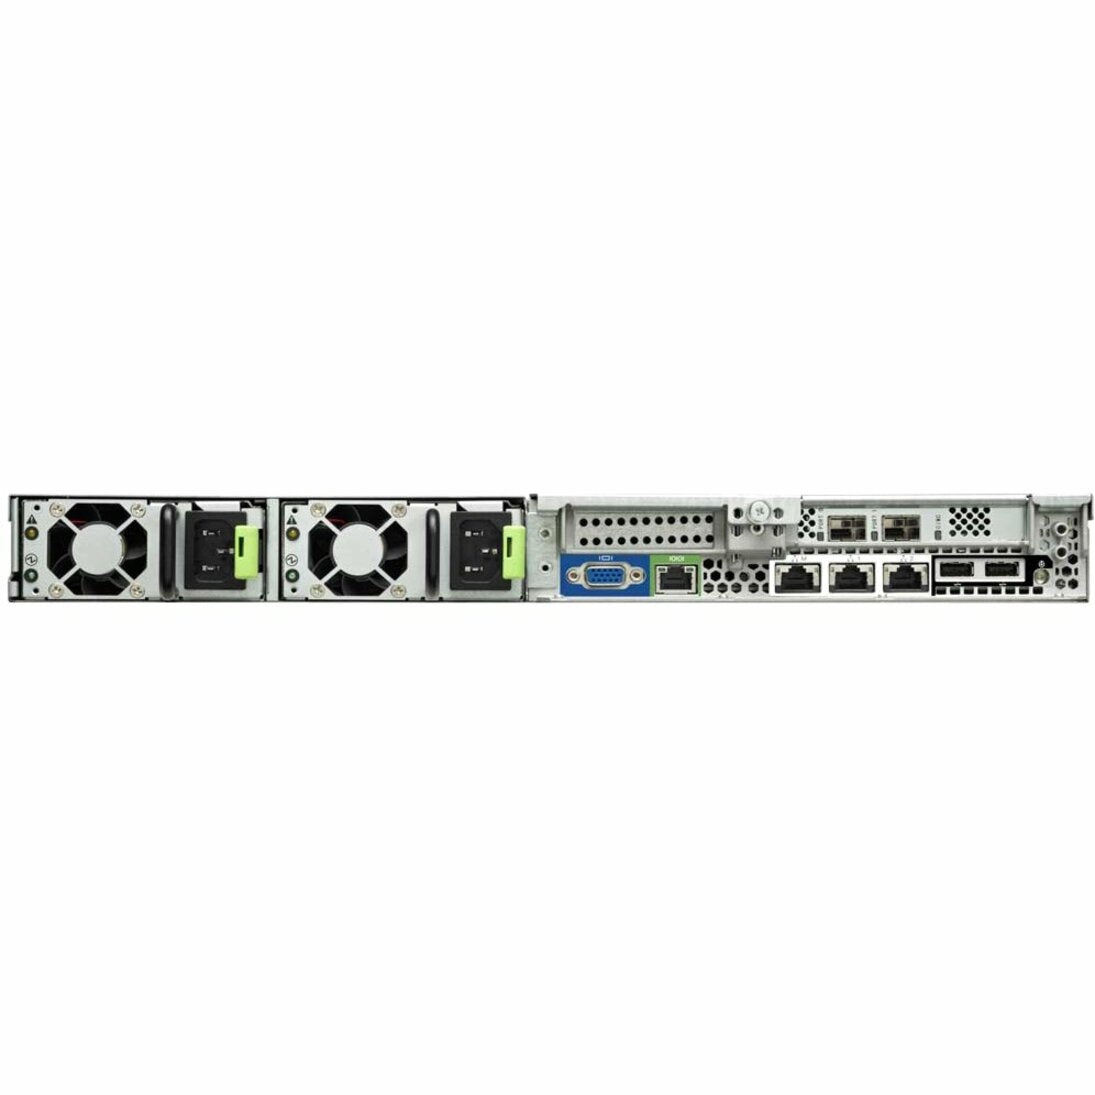 Cisco C220 M3 1U Rack Server - 2 x Intel Xeon E5-2640 2.50 GHz - 64 GB RAM - 4 TB HDD - (4 x 1TB) HDD Configuration - Serial ATA/600 6Gb/s SAS Controller